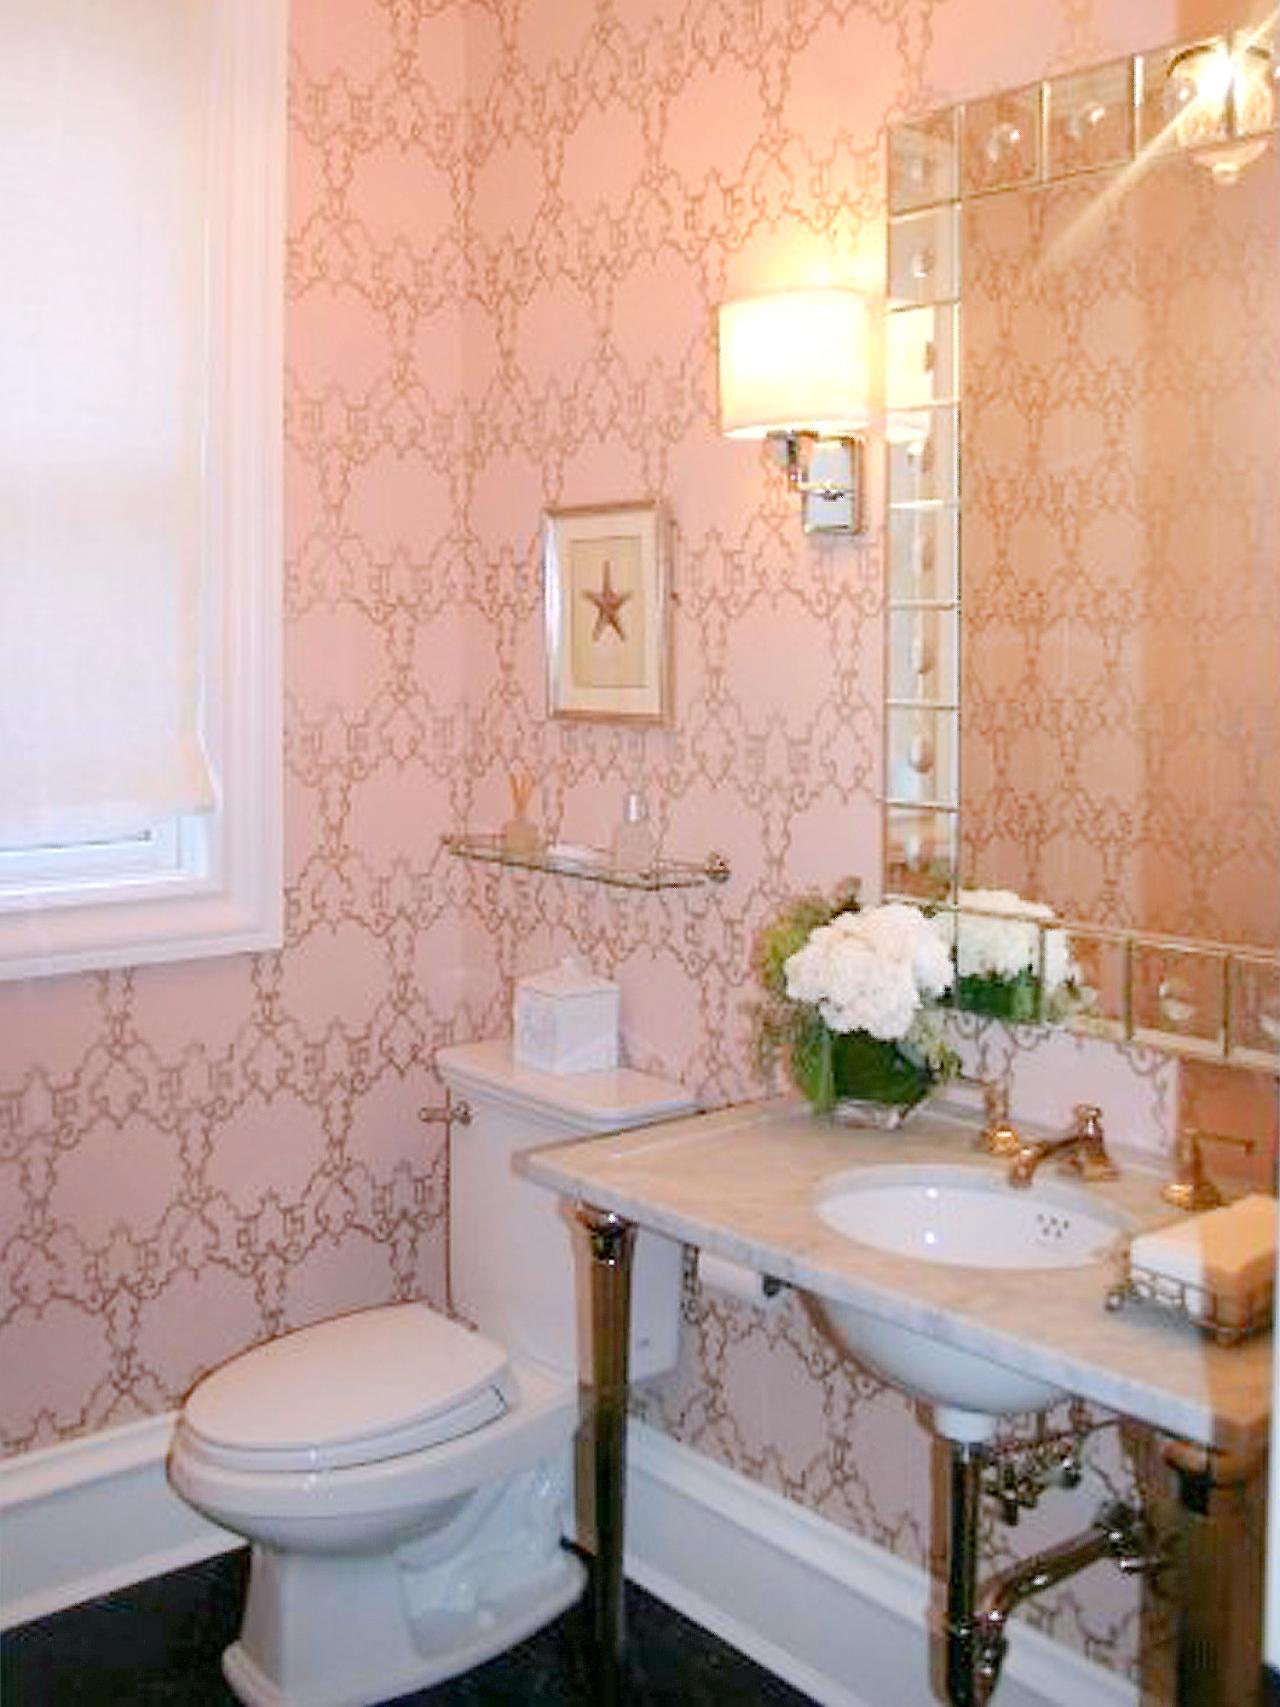 Reasons to Love Retro Pink  Tiled Bathrooms  HGTV s 